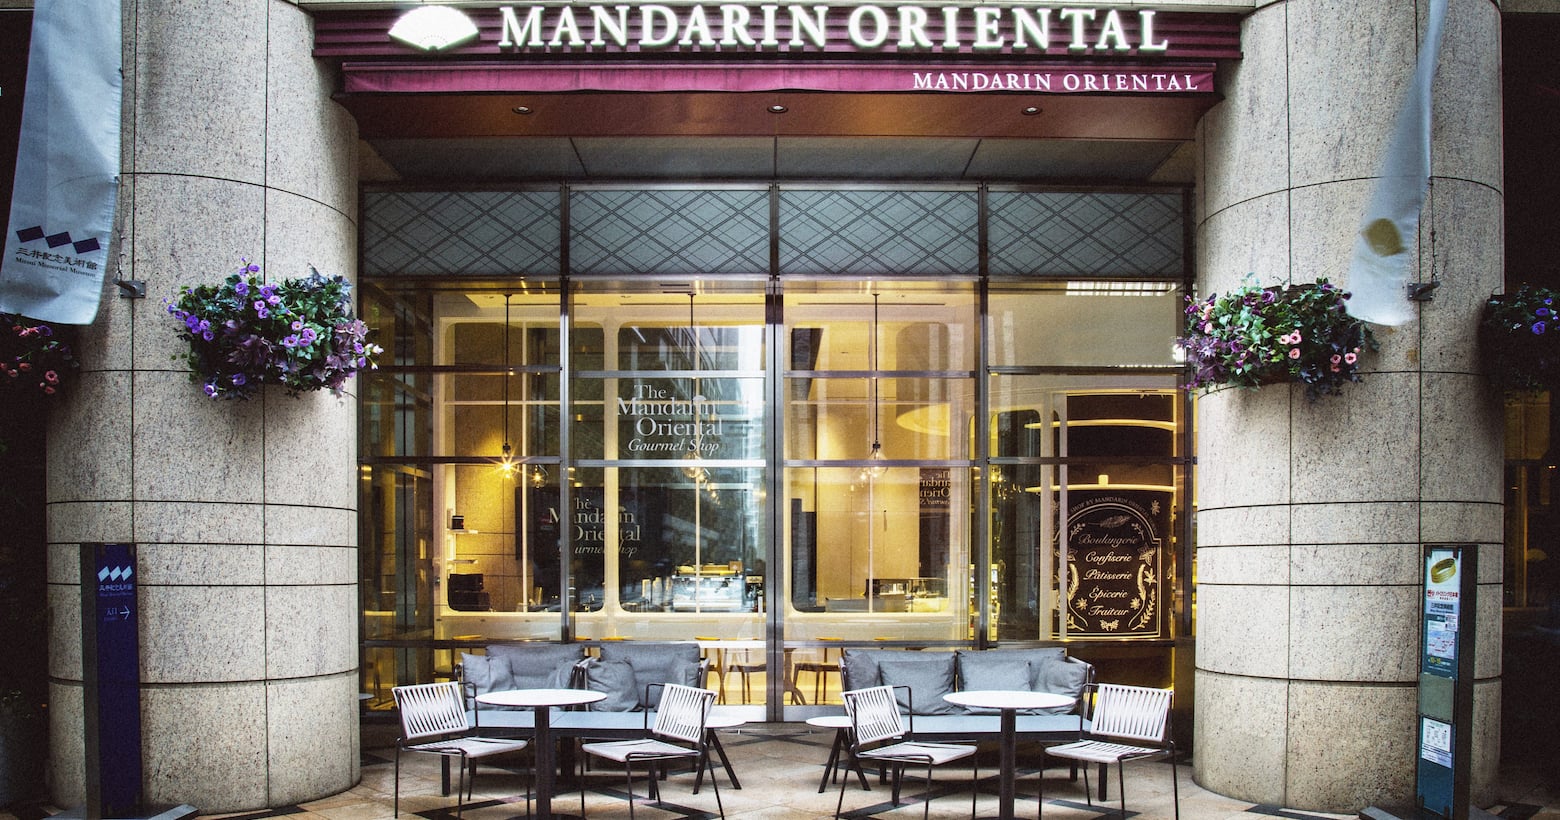 mandarin oriental gourmet shop